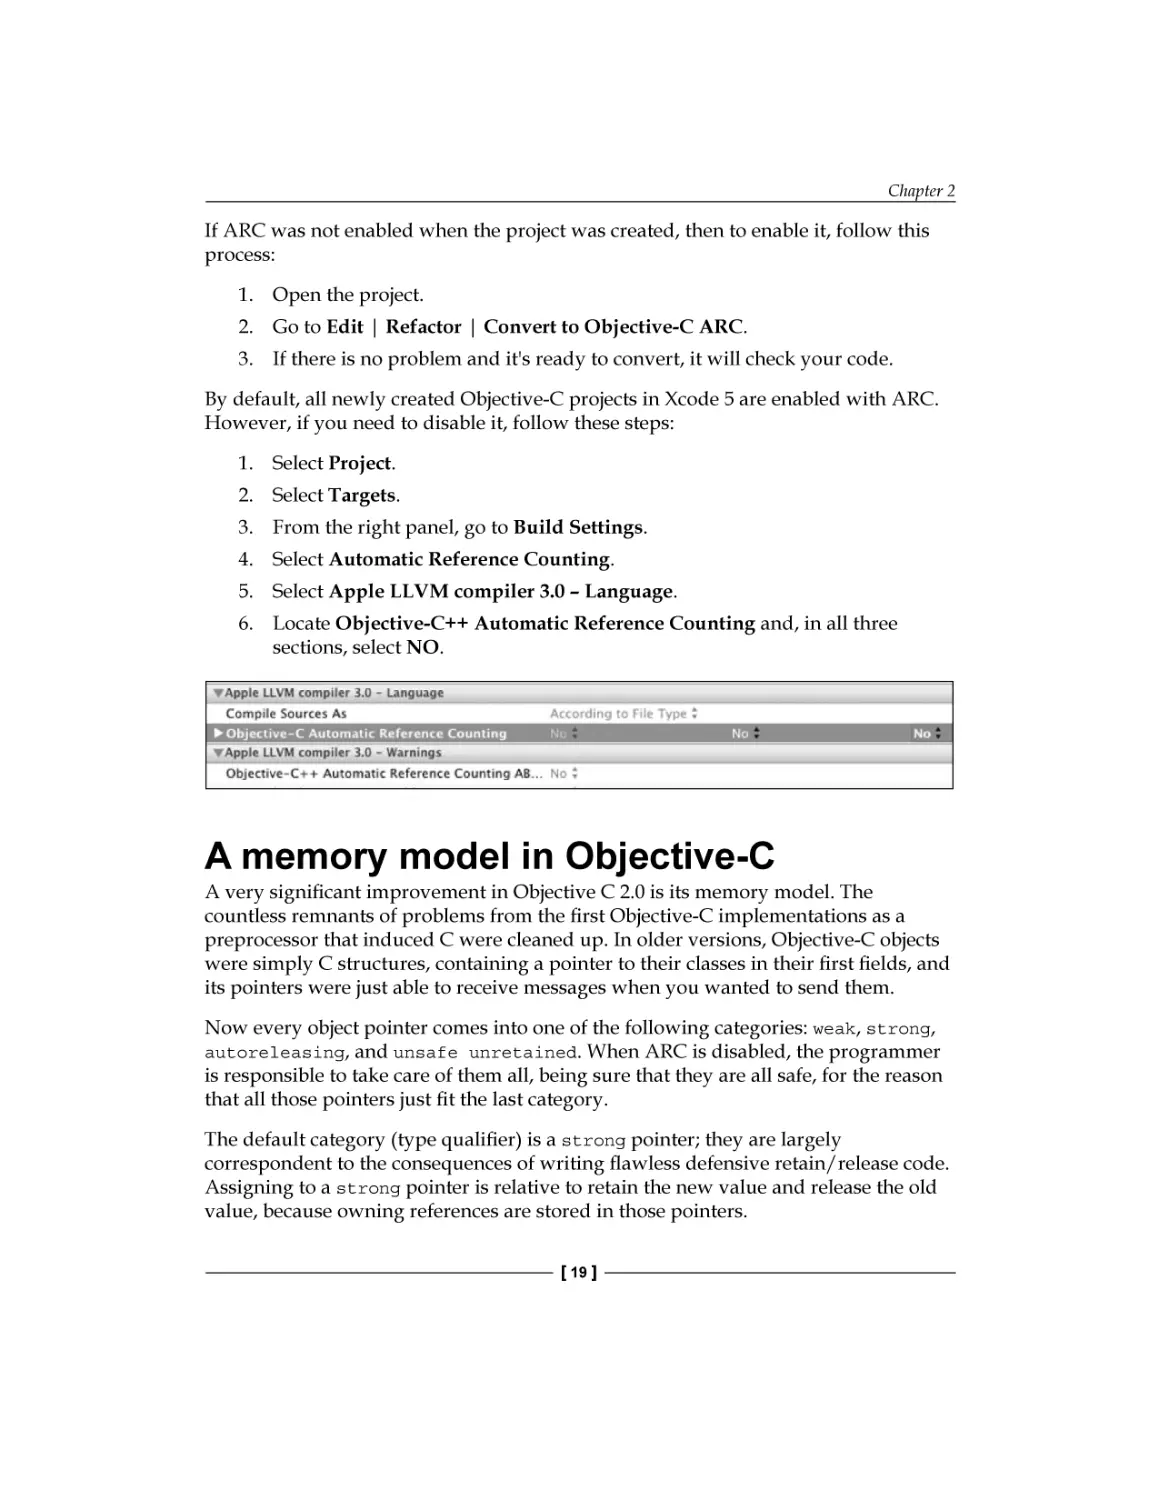 A memory model in Objective-C